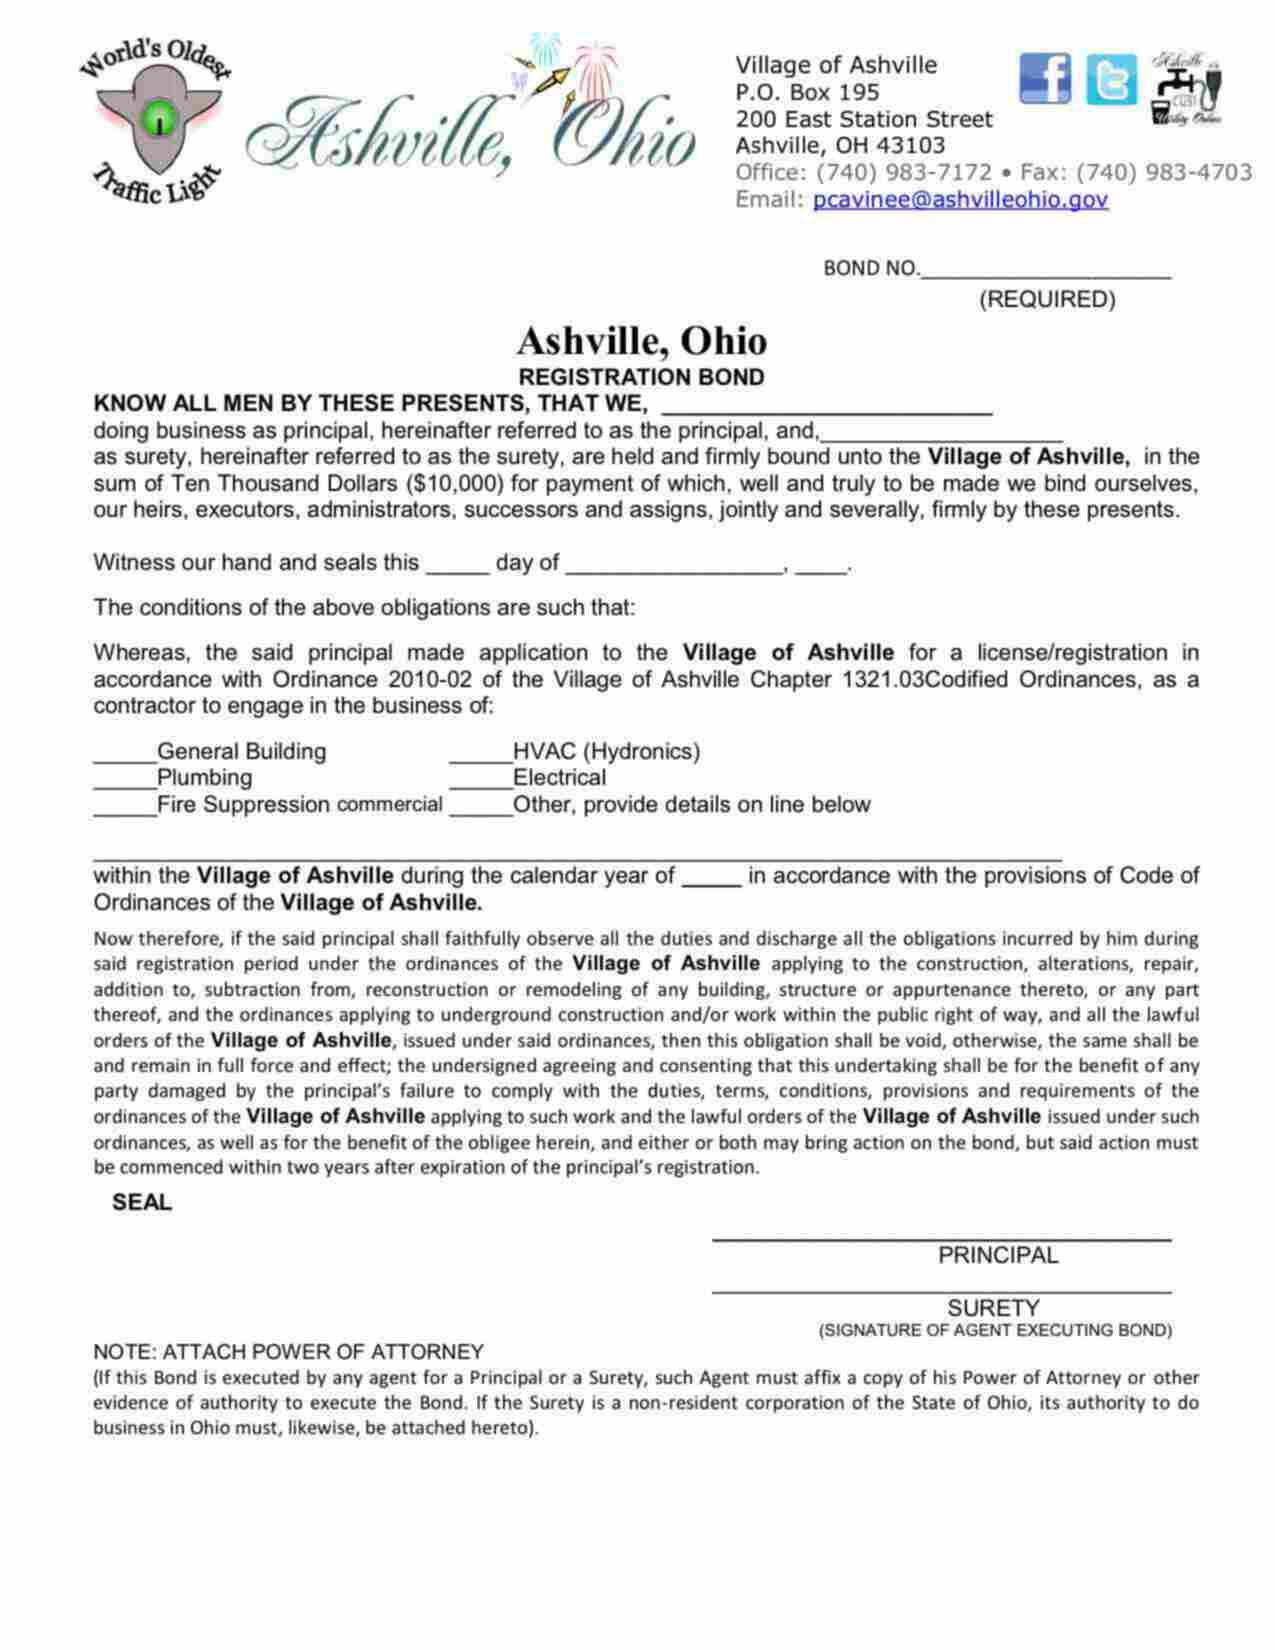 Ohio Registration - Other Bond Form